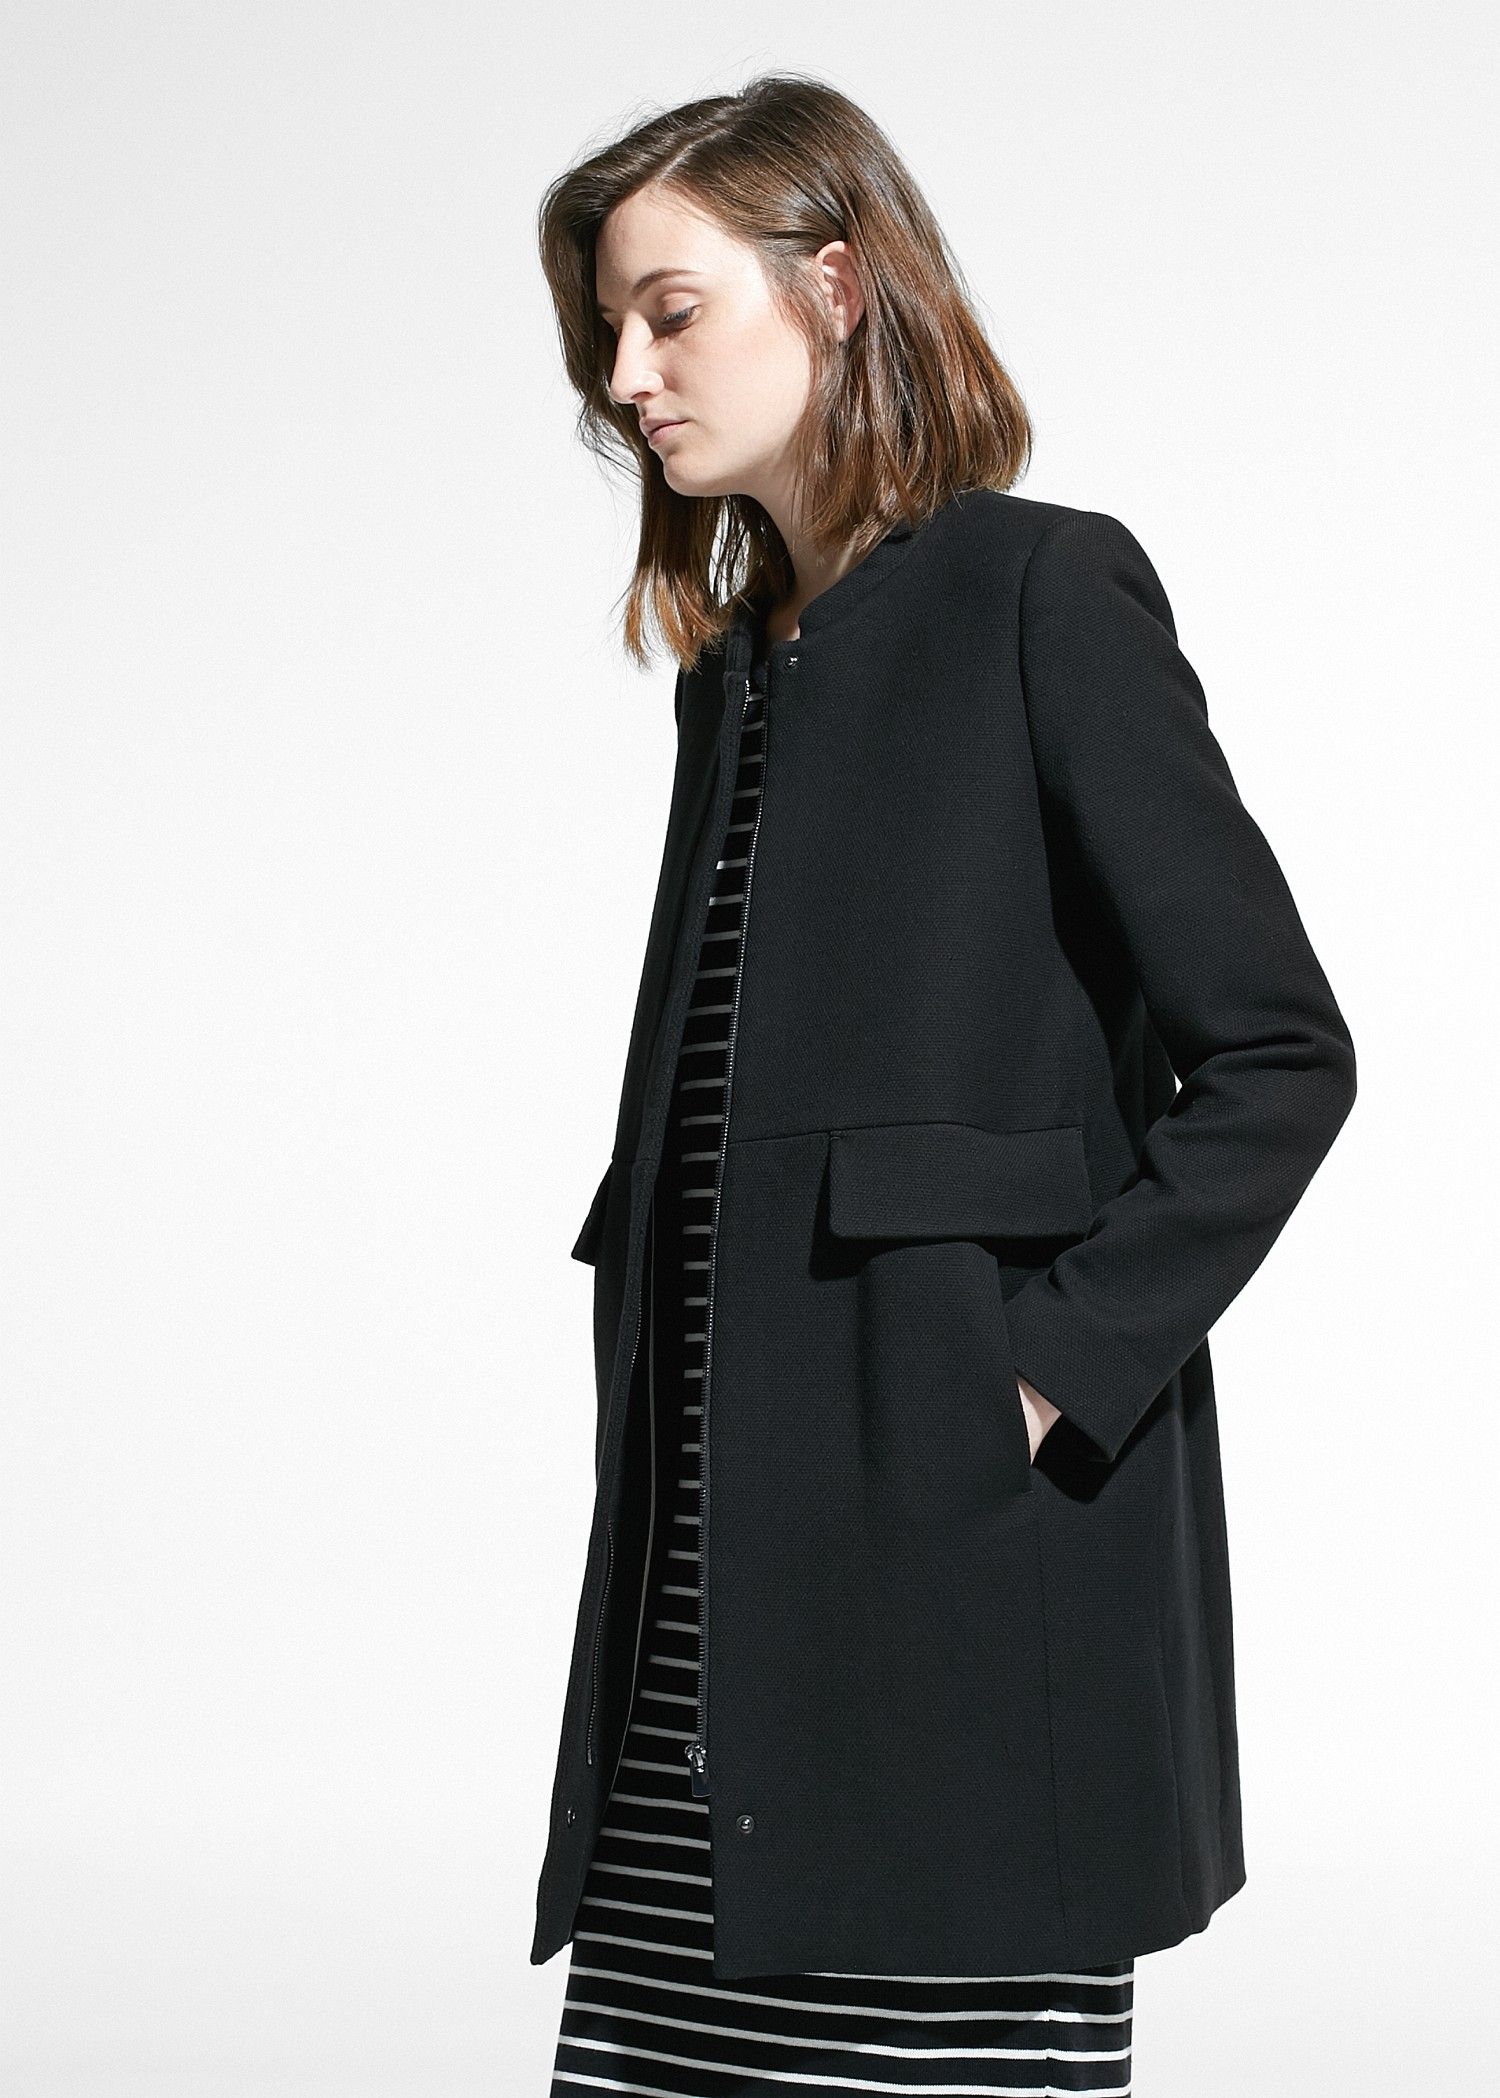 Lyst - Mango Wool-Blend Straight-Cut Coat in Black1500 x 2098